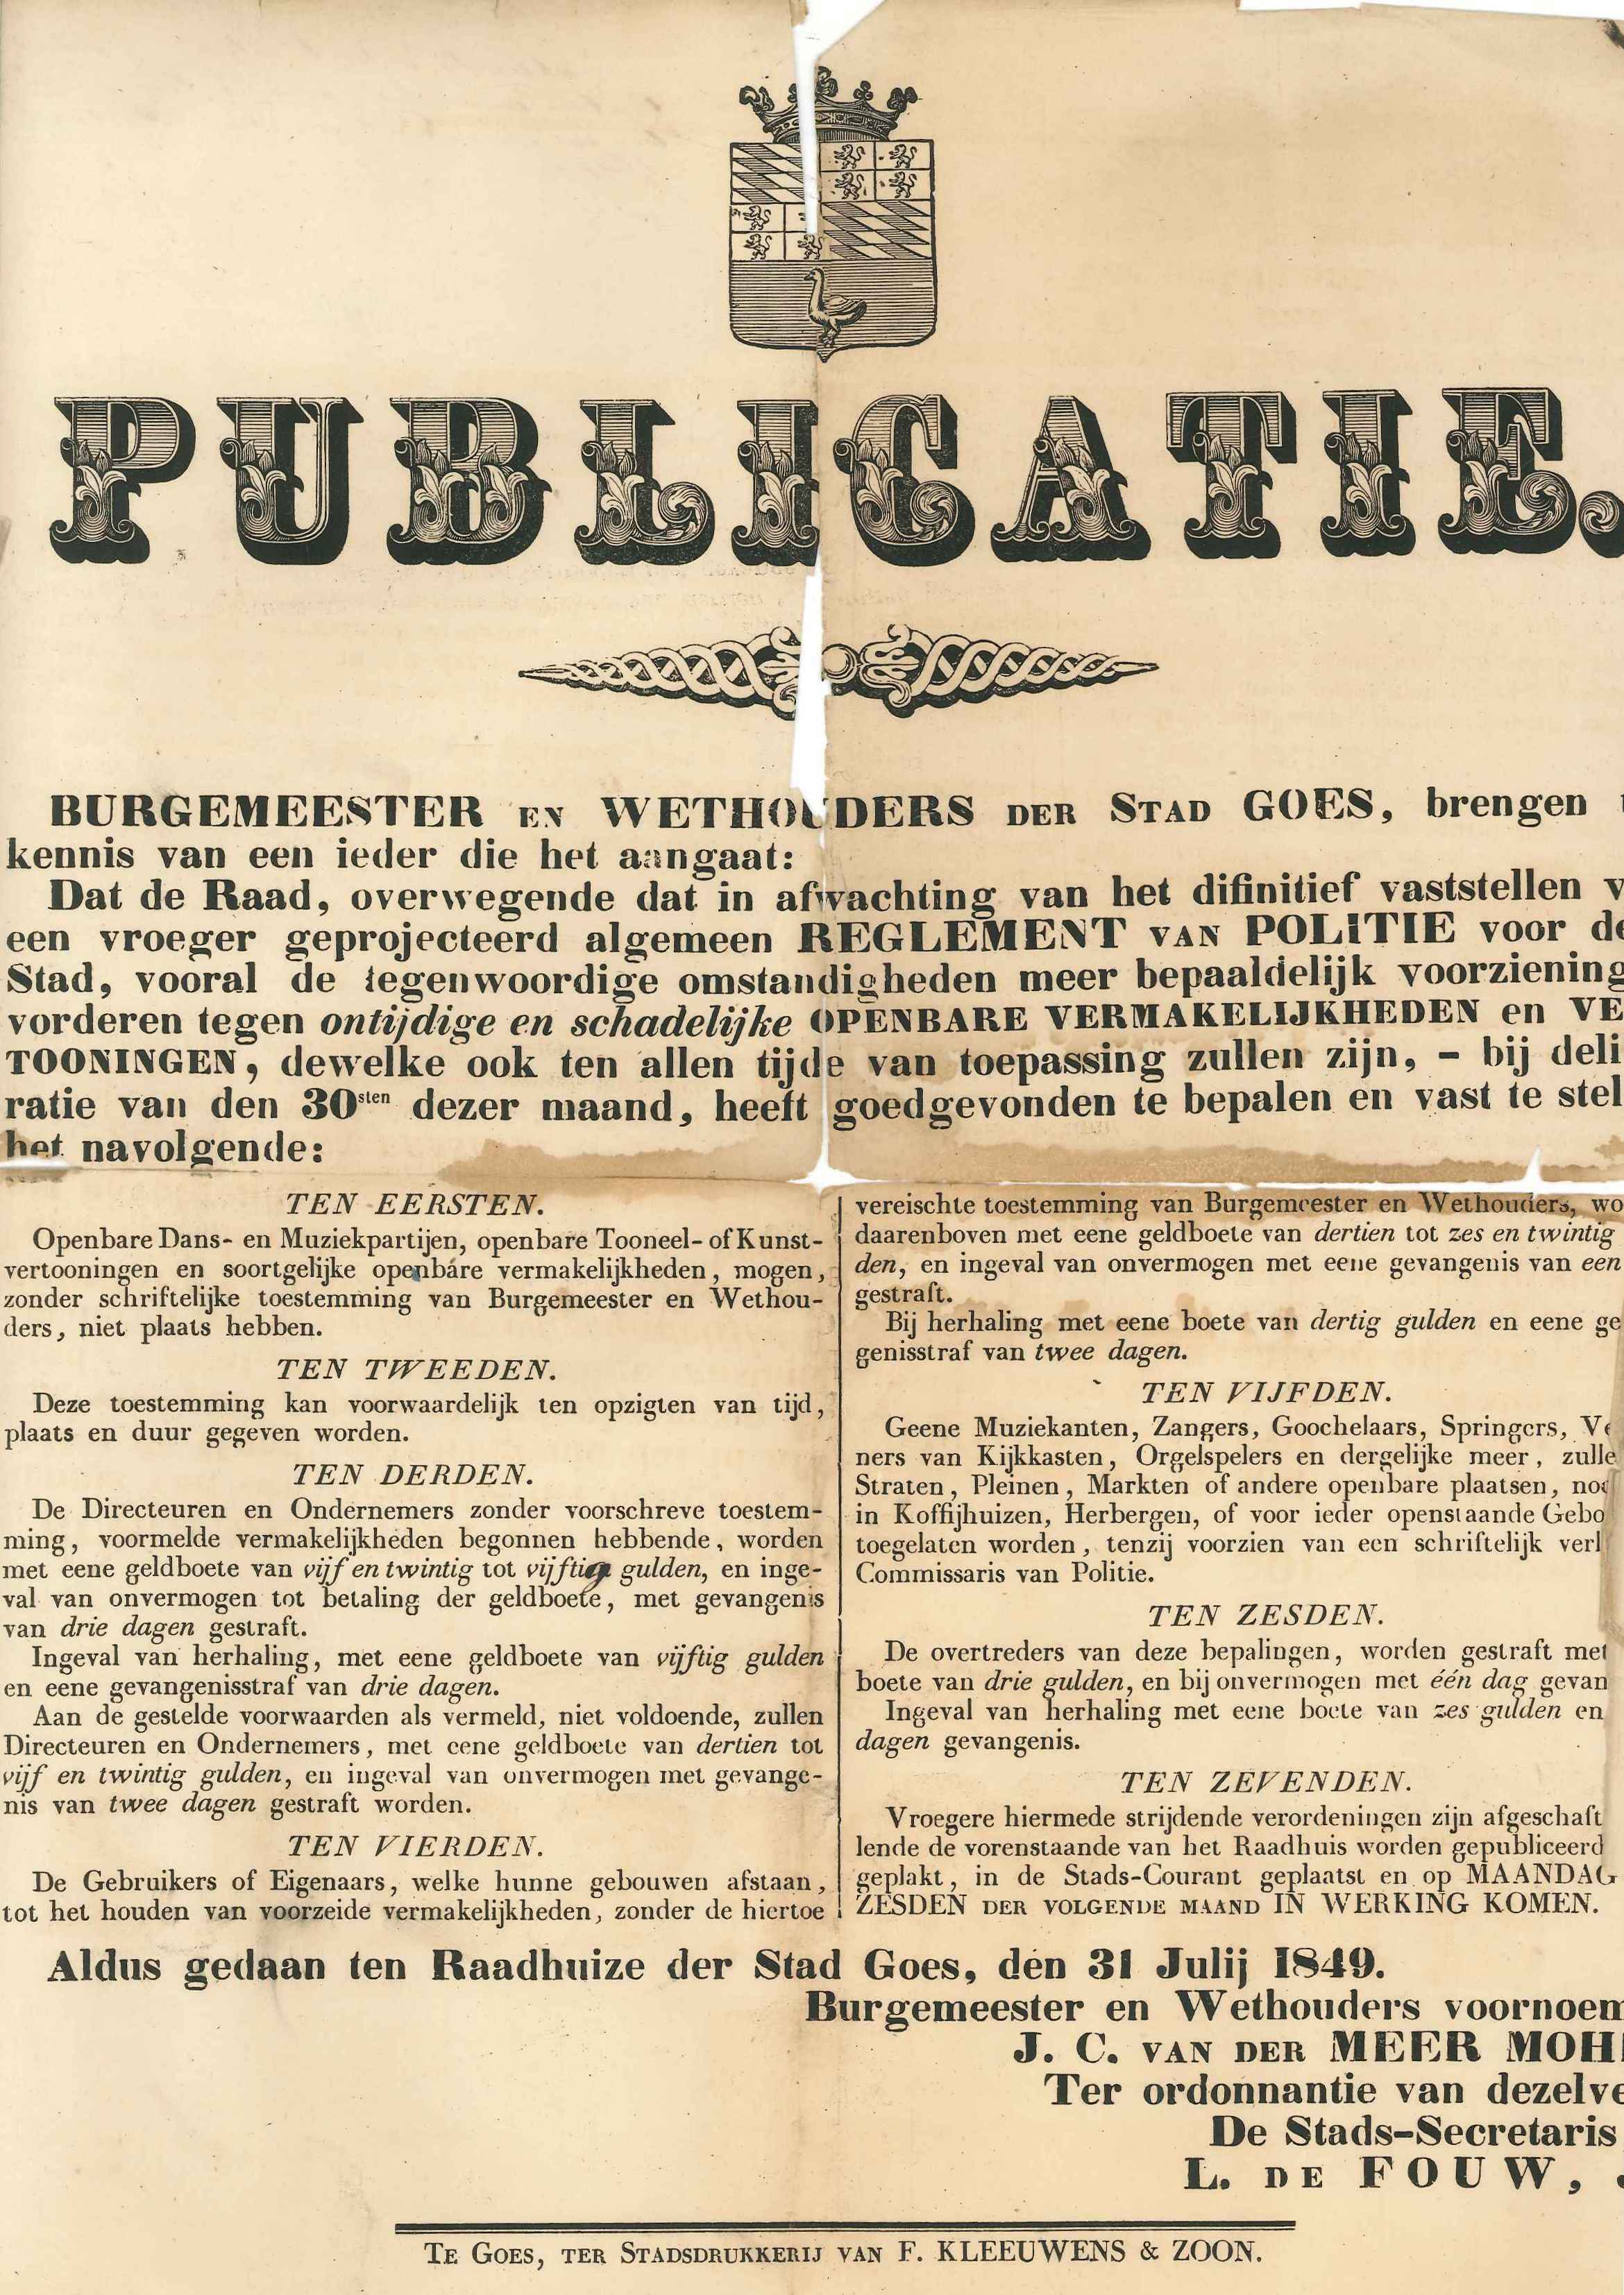  Bekendmaking over verboden openbare vermakelijkheden, 1849. GAG.ASG.inv.nr. 1849.